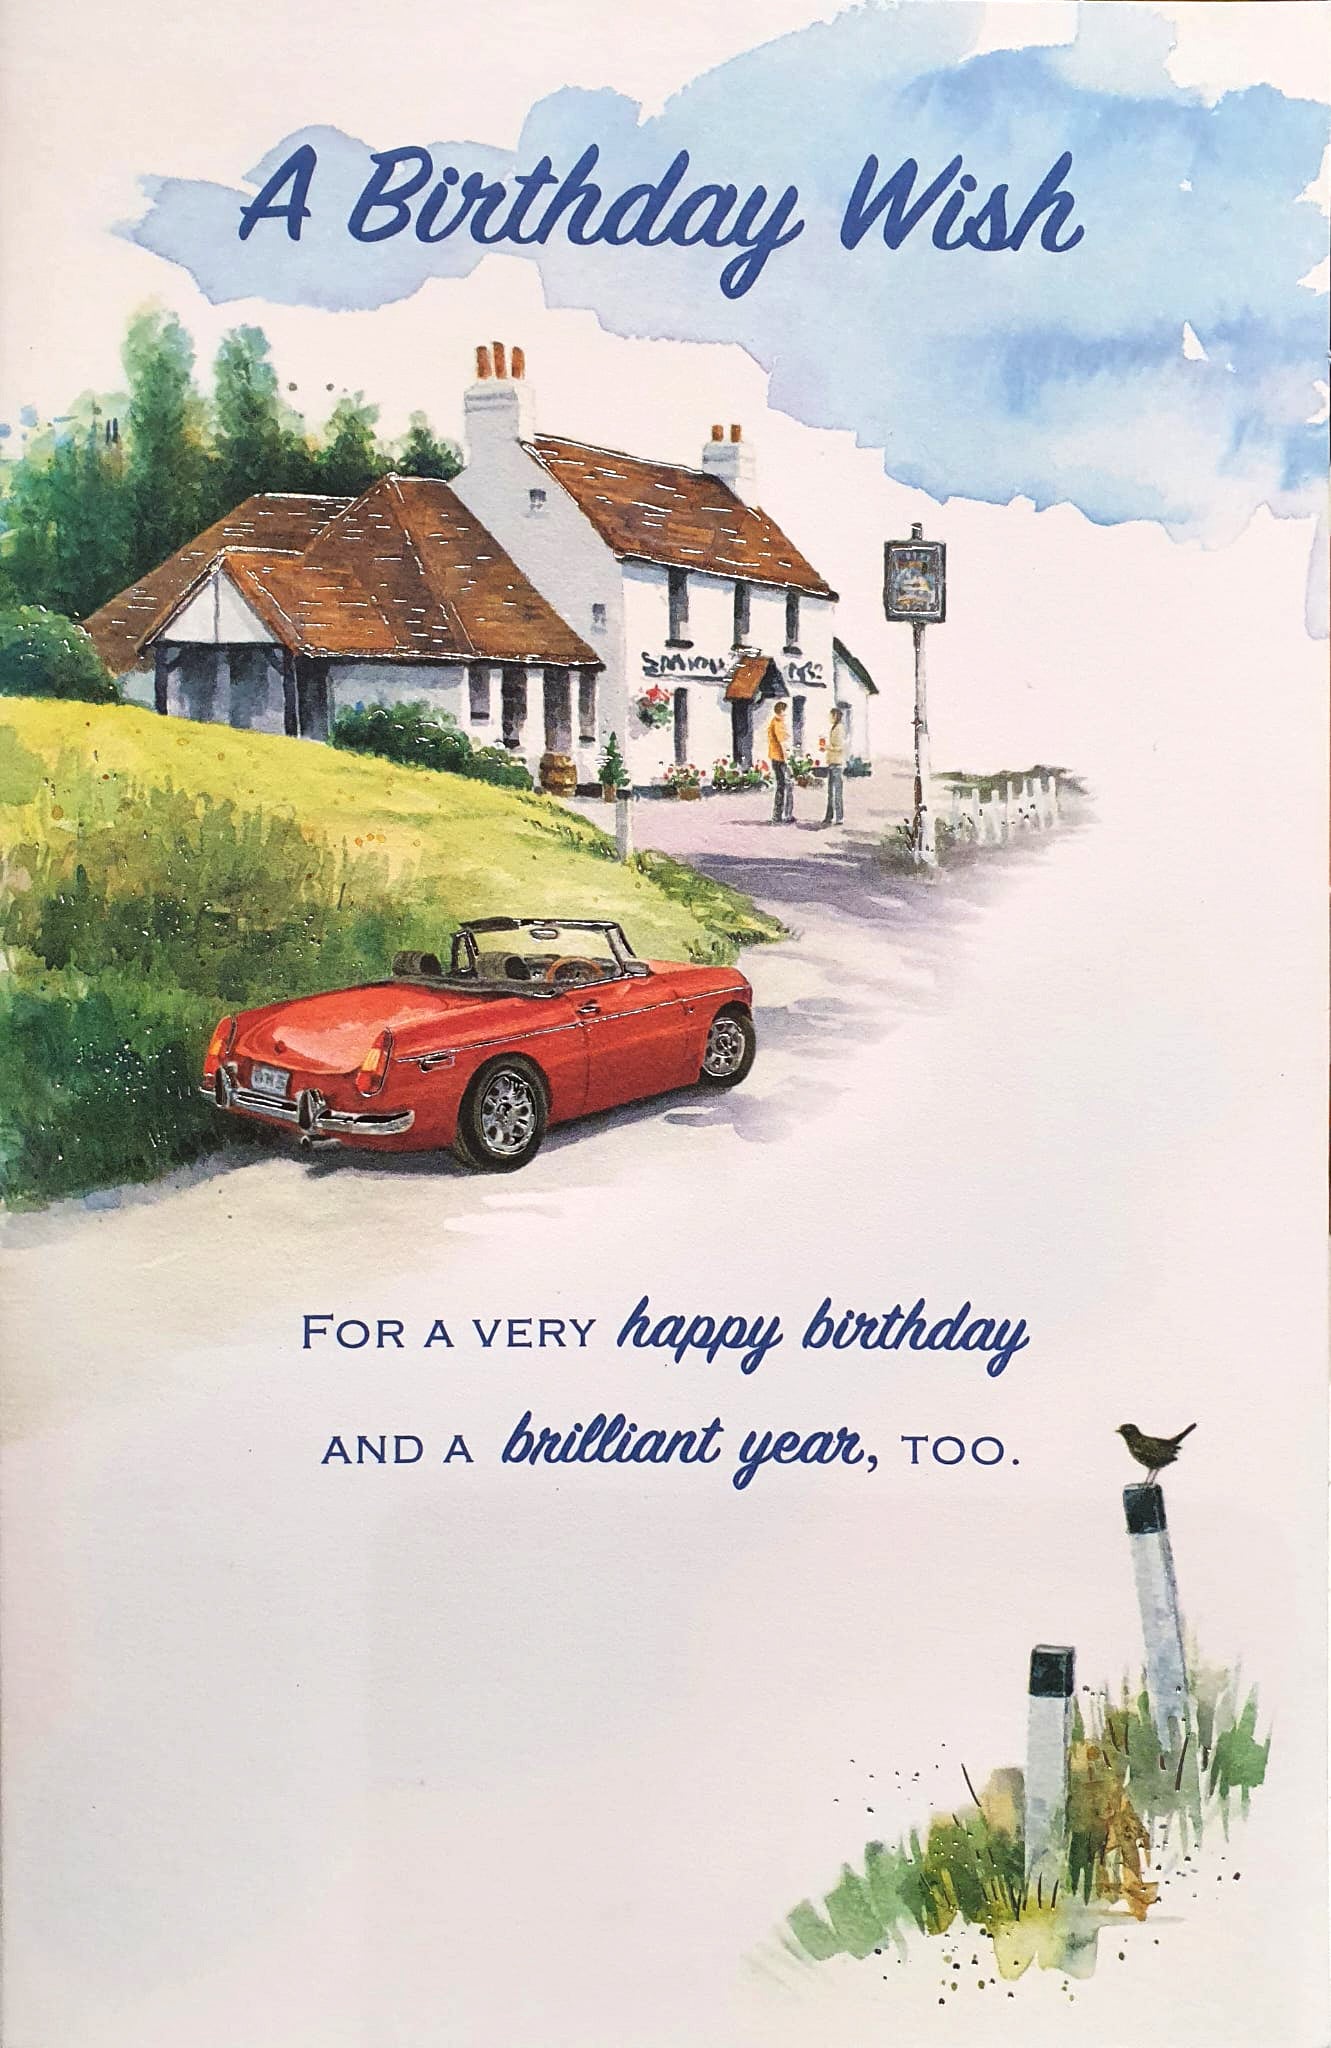 A Birthday Wish Card - Red Car and Pub